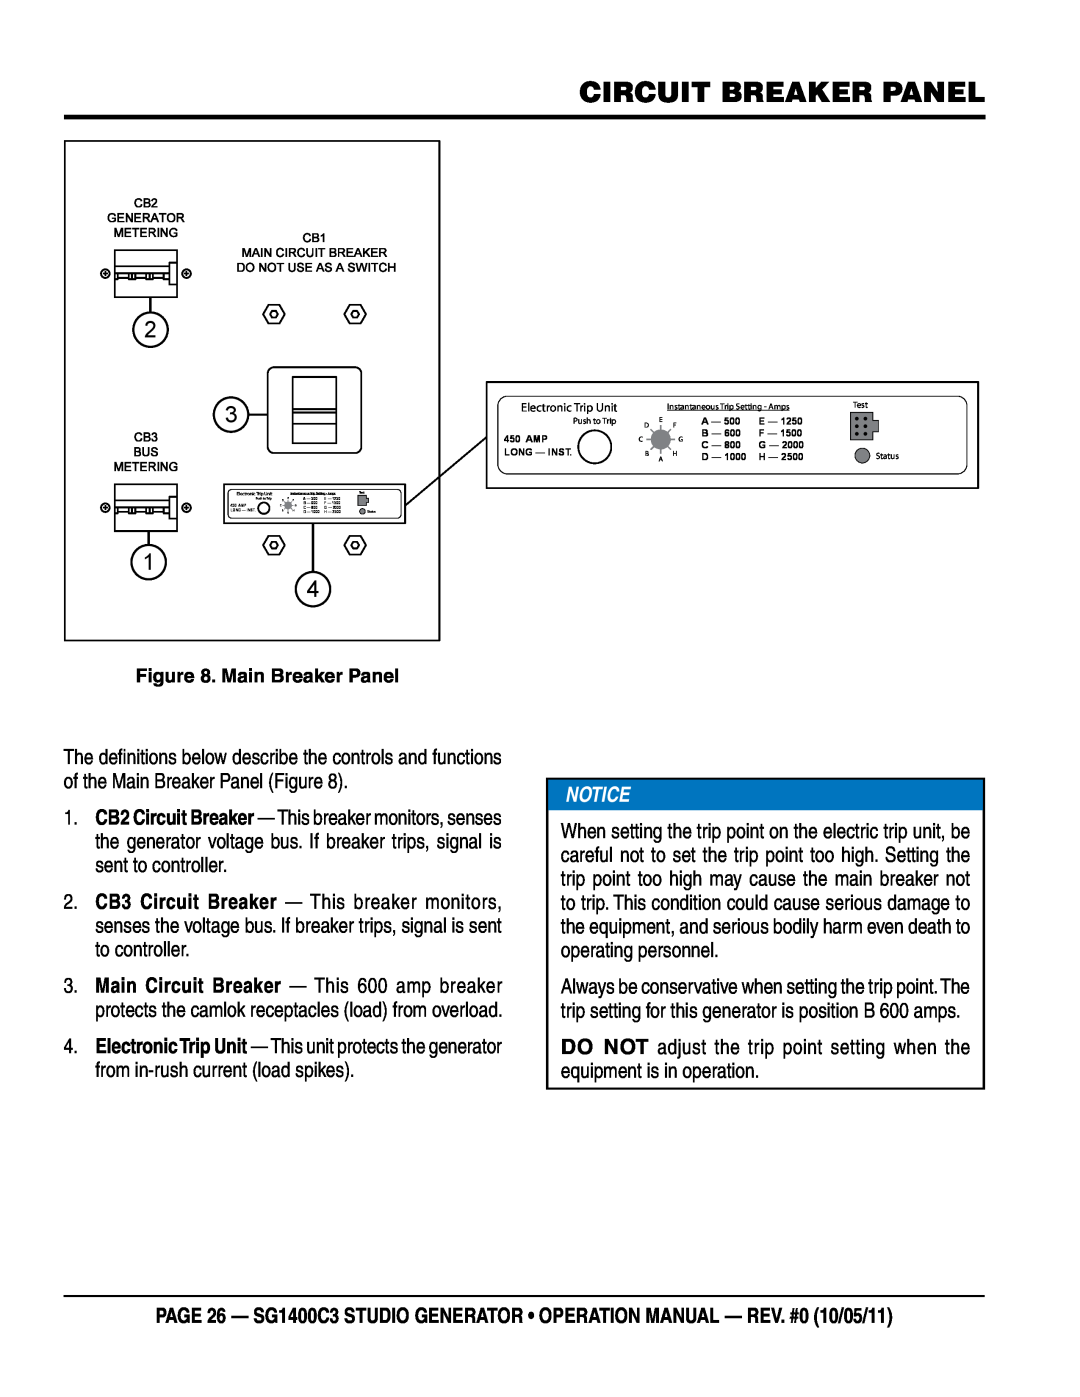 Multiquip SG1400C3 operation manual circuit Breaker panel, Main Breaker Panel 